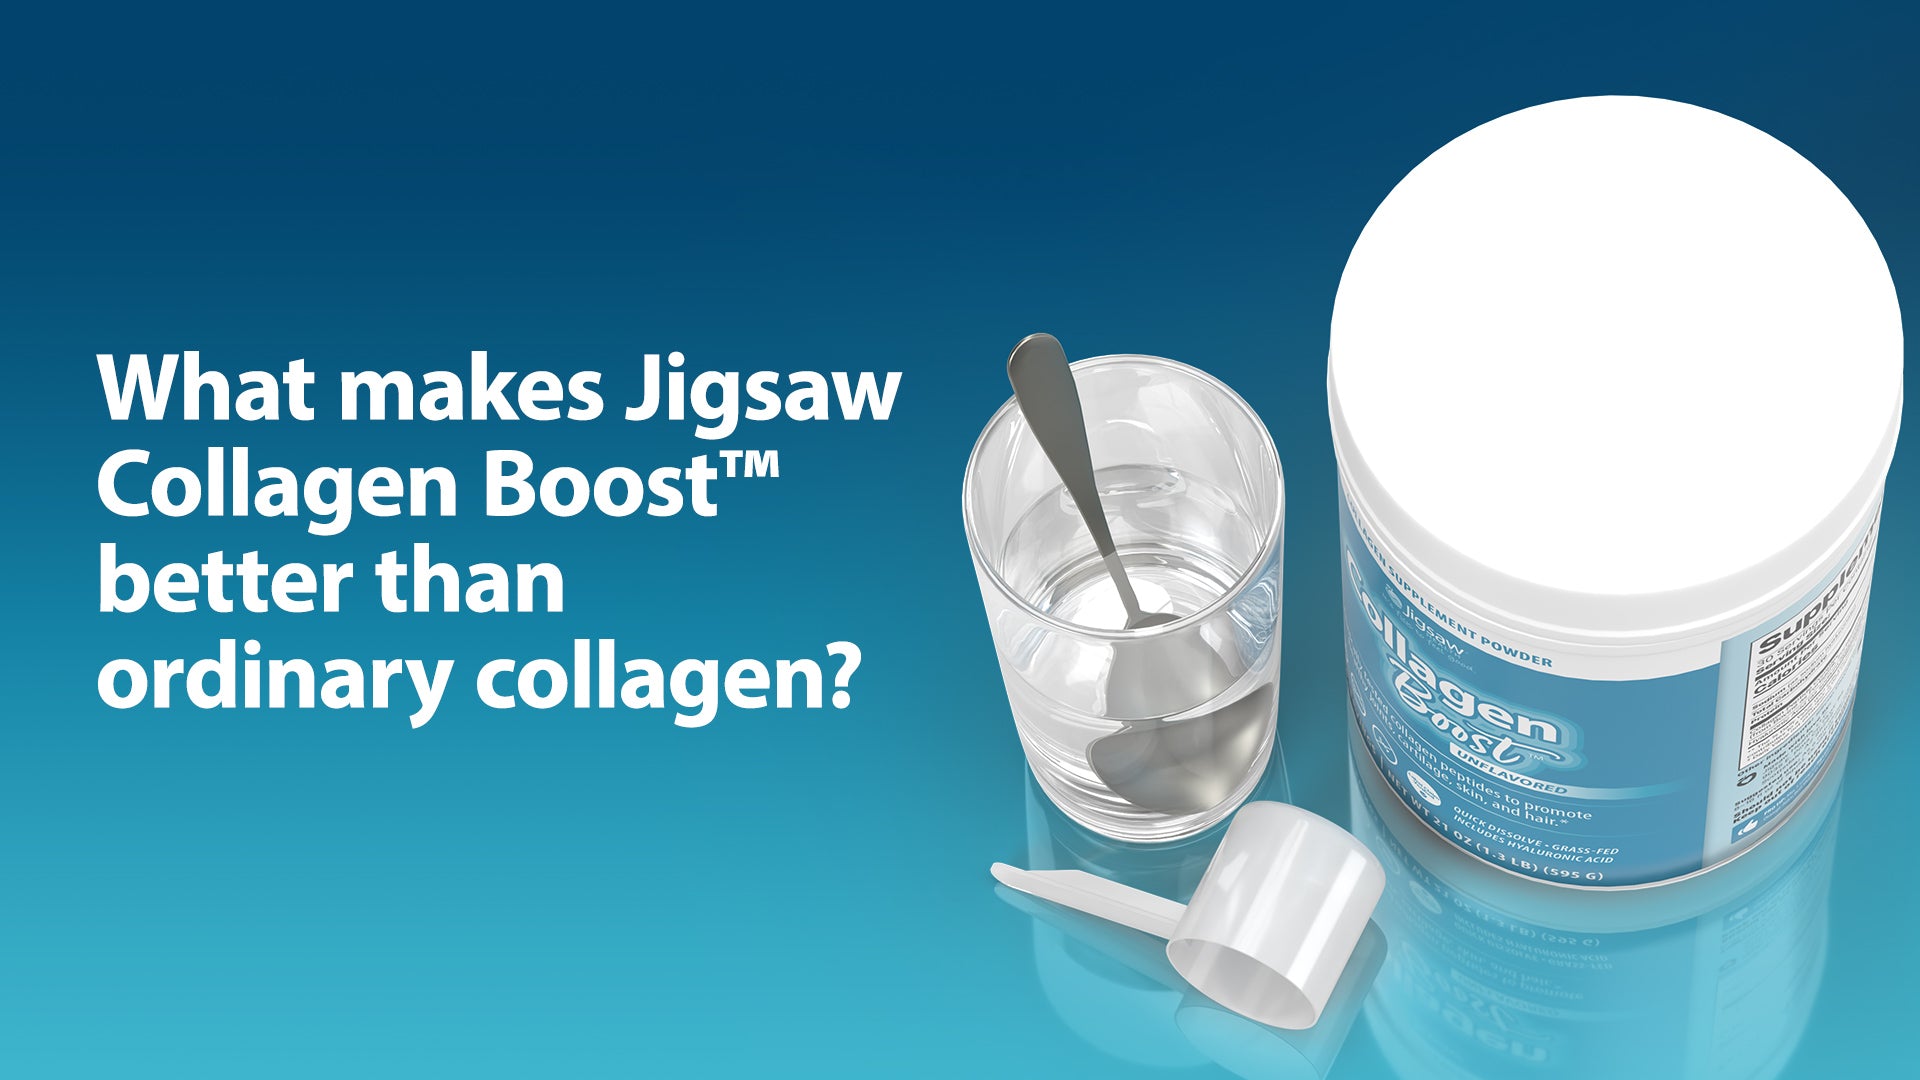 What makes Jigsaw Collagen Boost better than ordinary collagen?